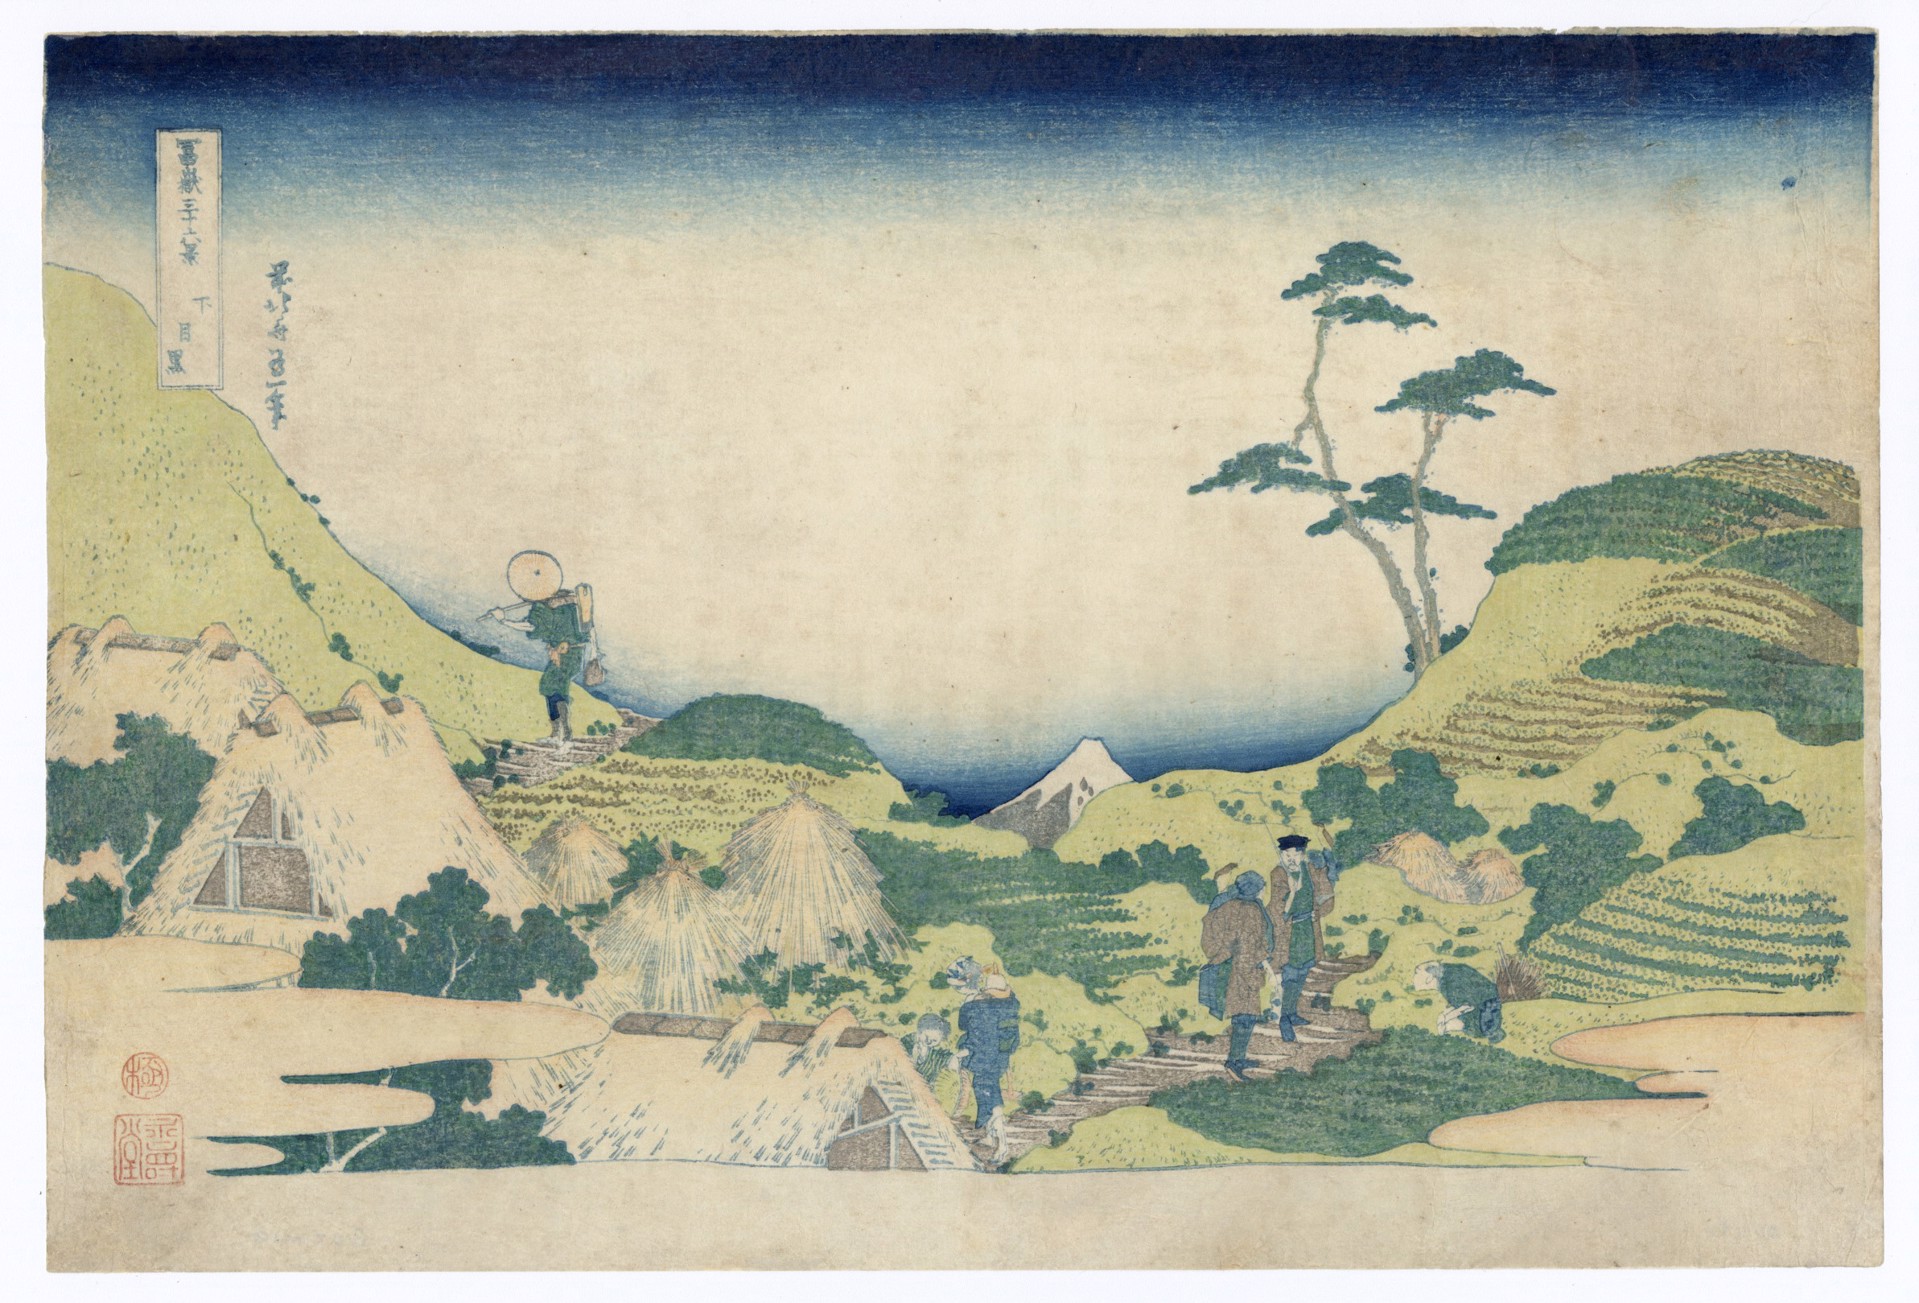 Lower Megoro by Hokusai